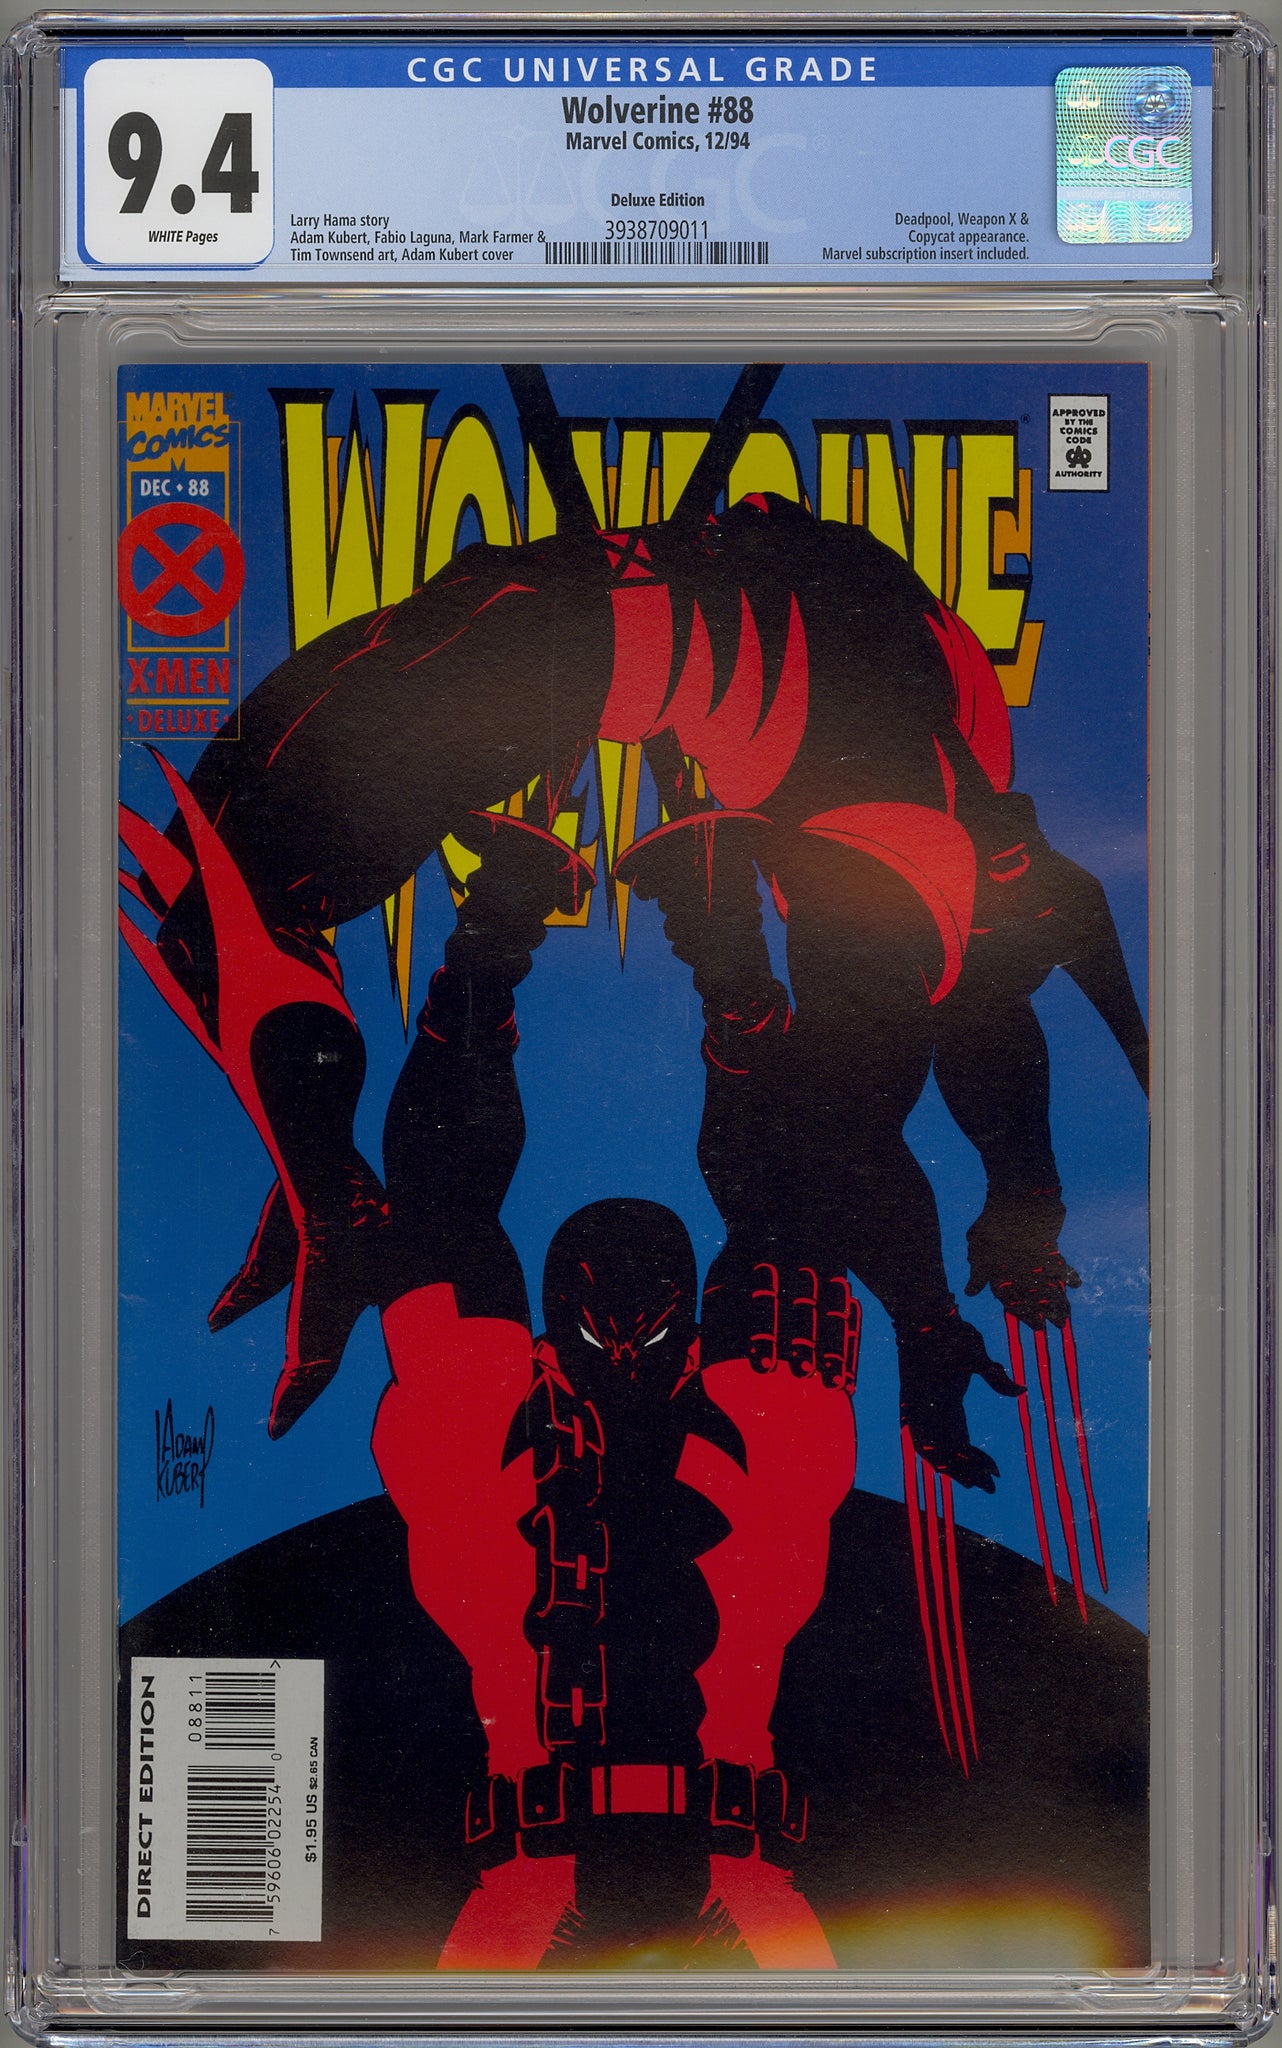 Wolverine #88 (1994) deluxe edition - Deadpool